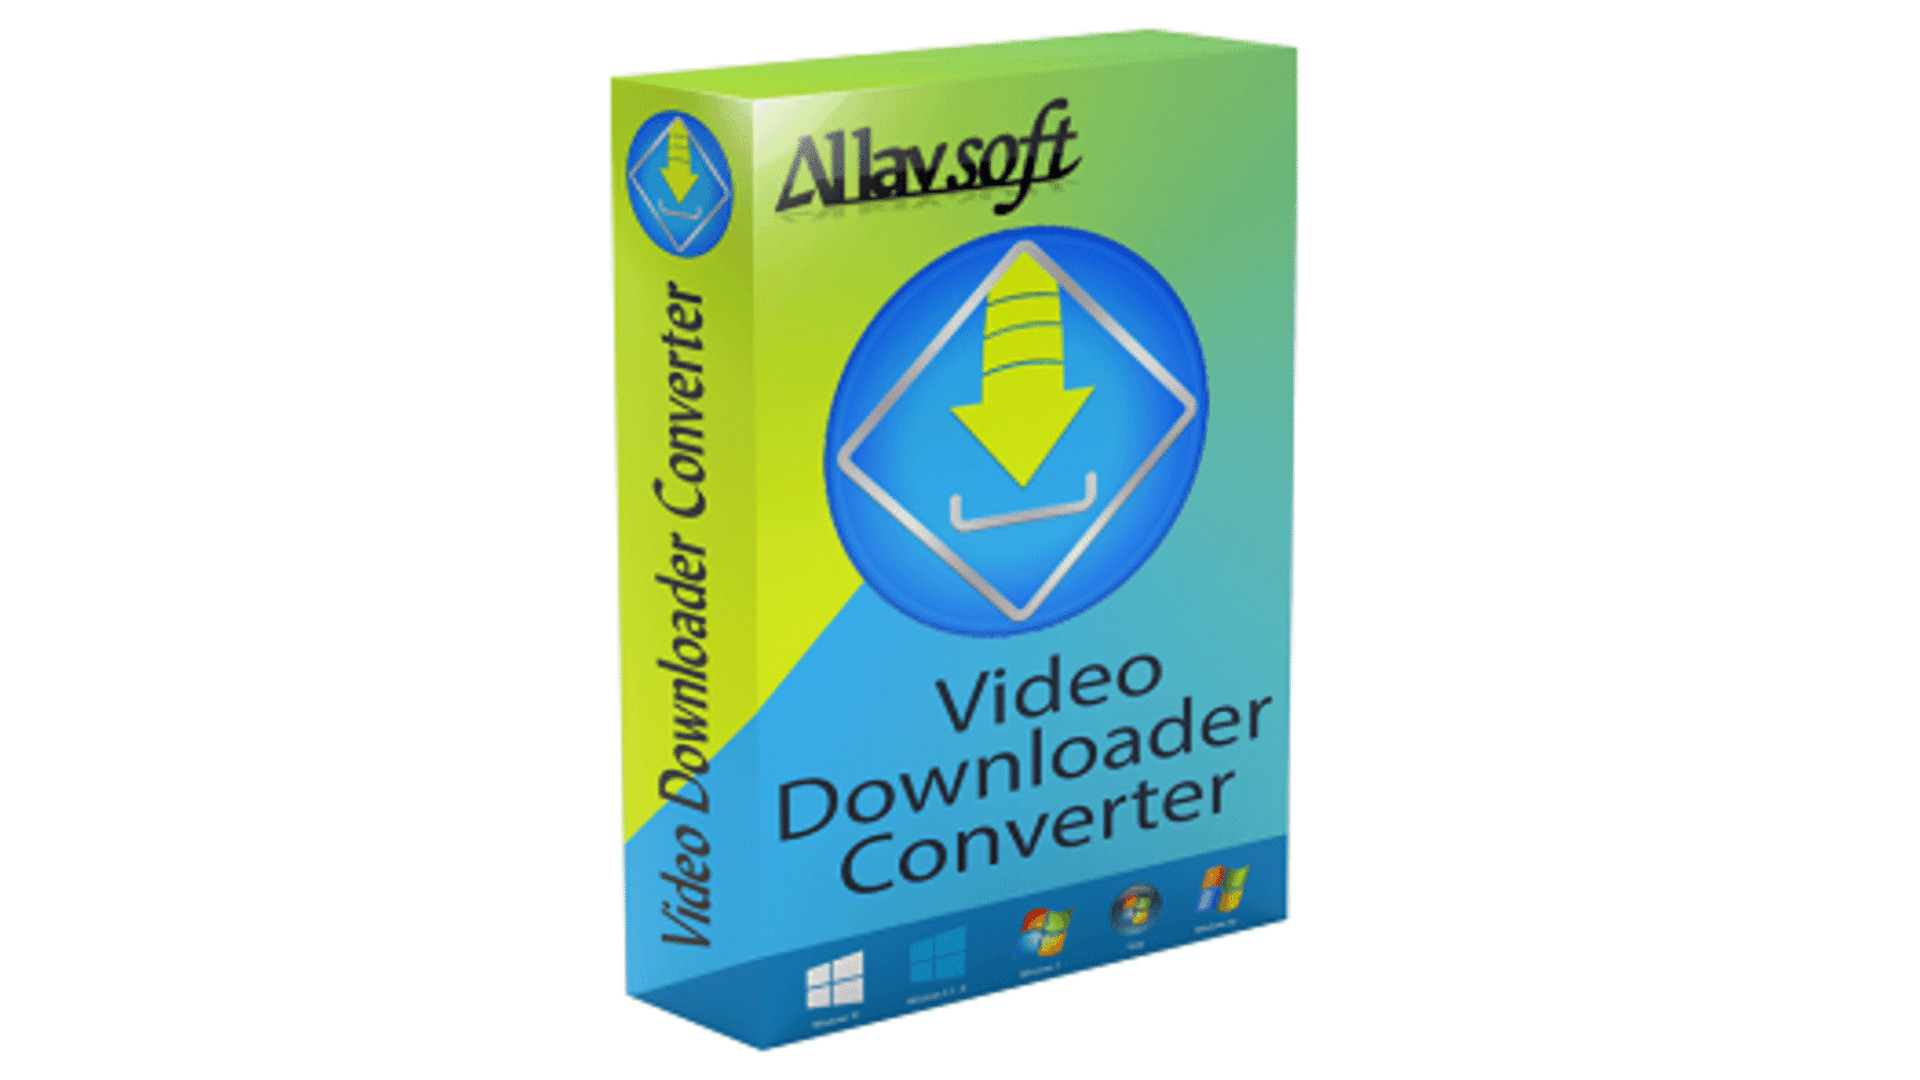 [$ 2.75] Allavsoft Video Downloader and Converter for Windows CD Key